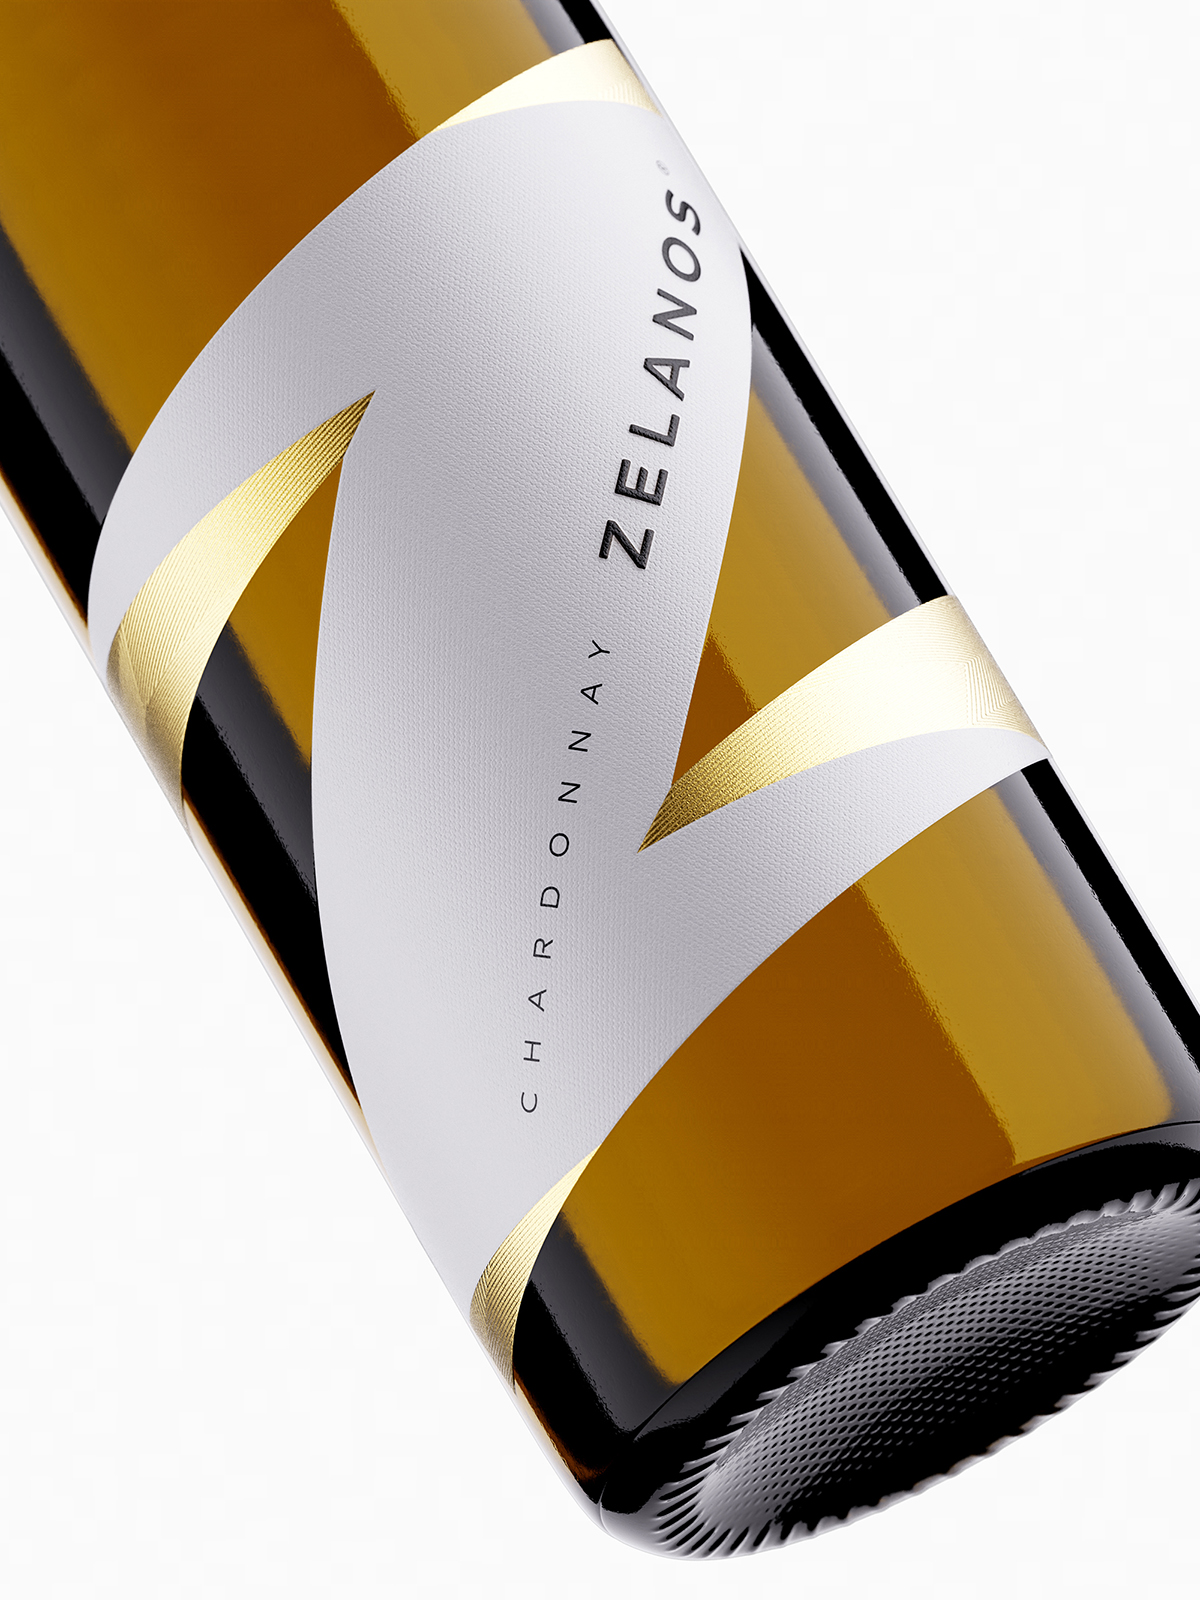 Zelanos ‘Z’ Wine Label Design